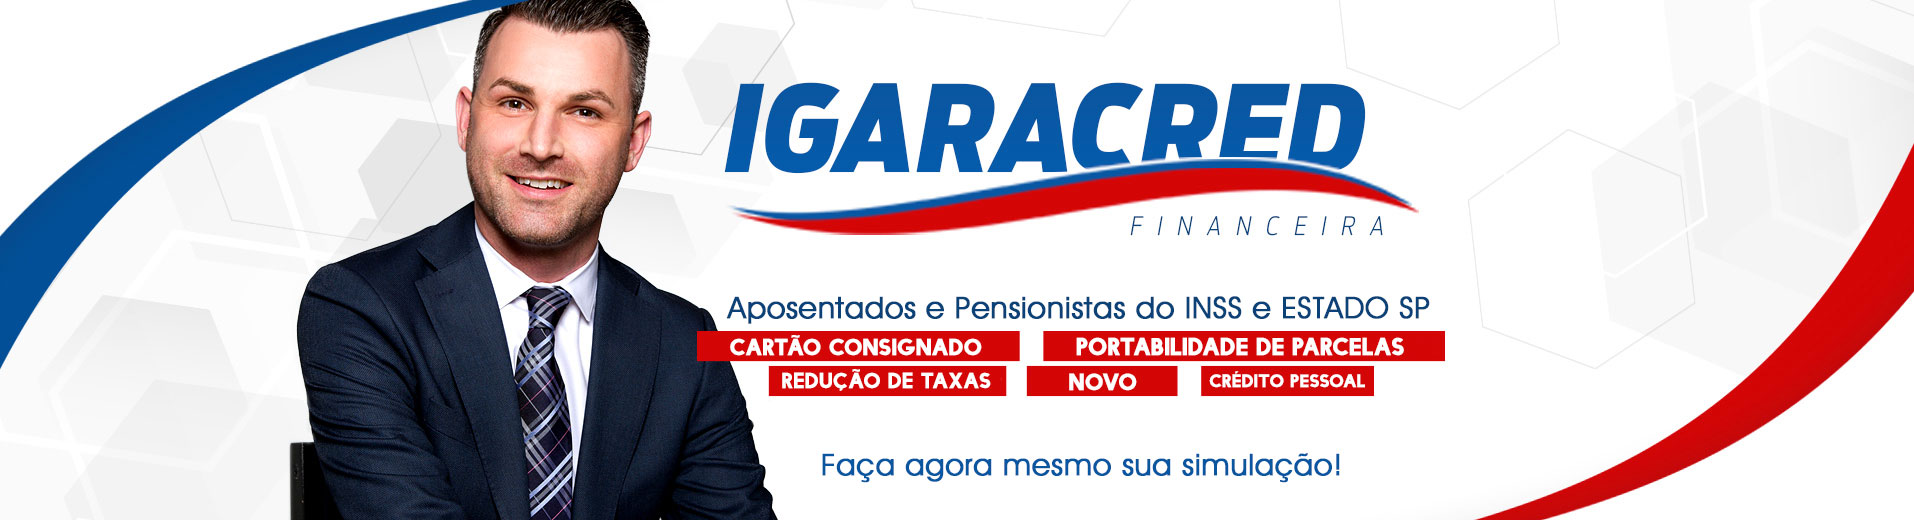 Igaracred Financeira